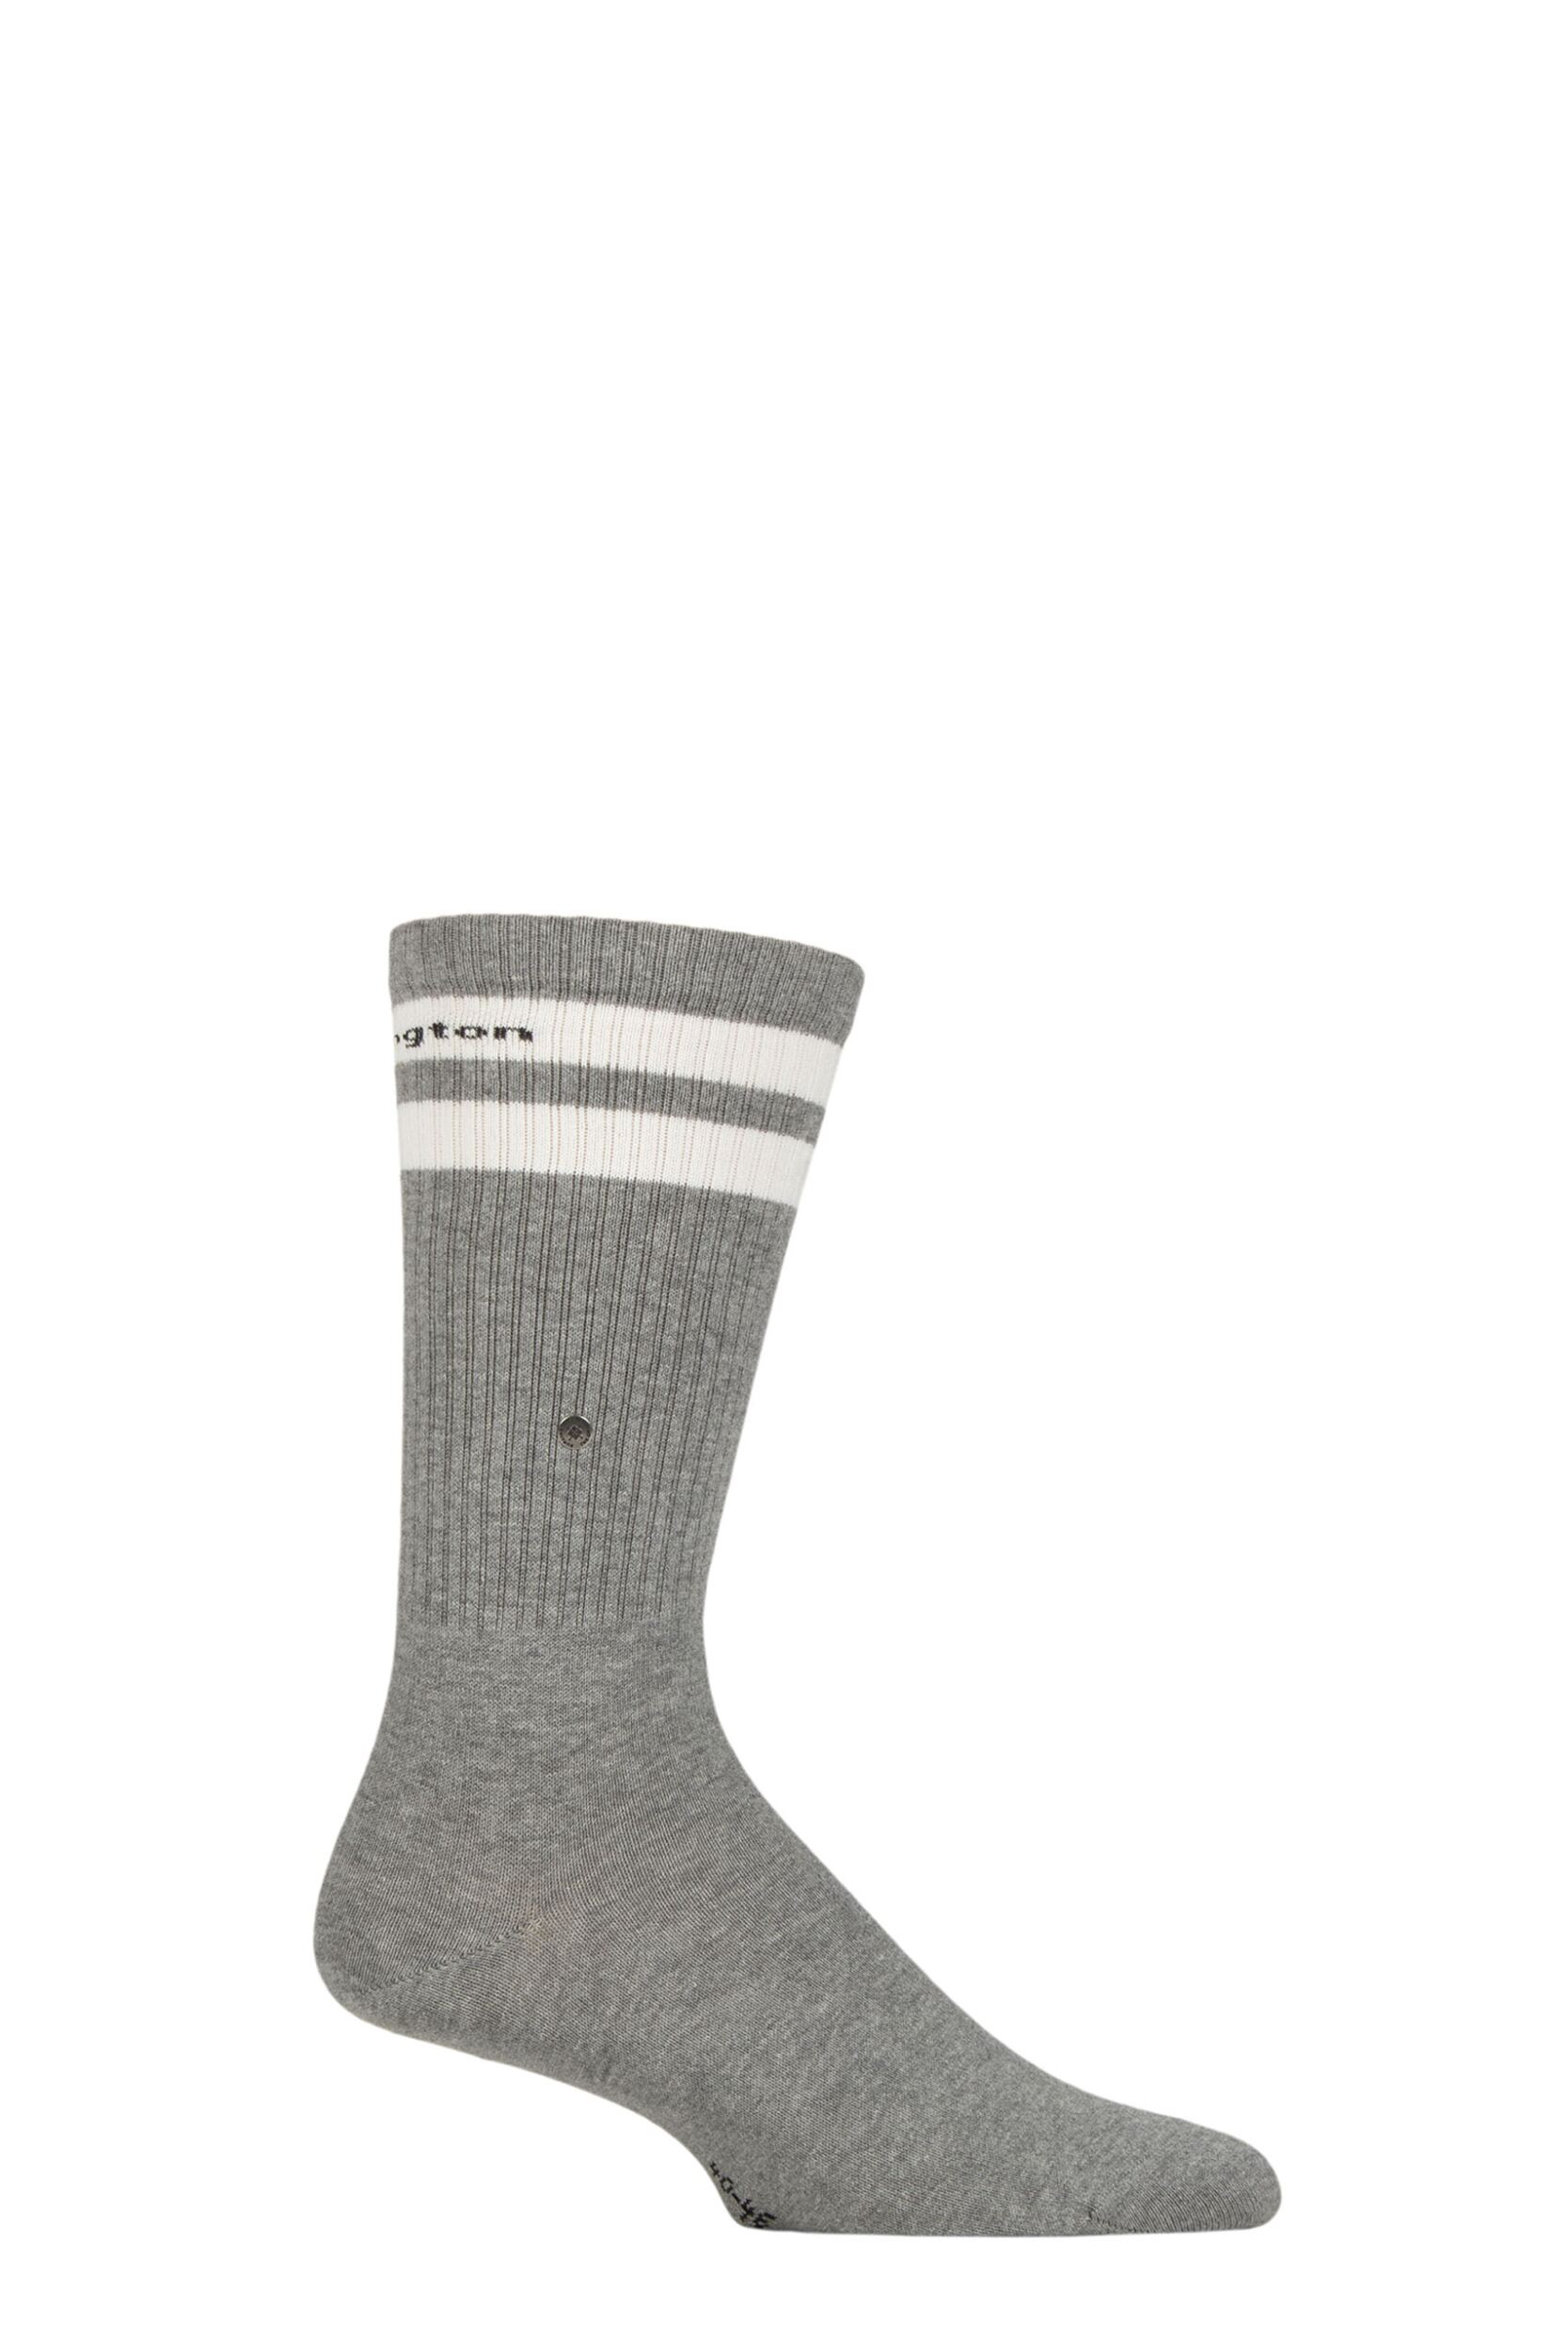 Mens 1 Pair Burlington Court Ribbed Cotton Sports Socks Grey 6.5-11 Mens